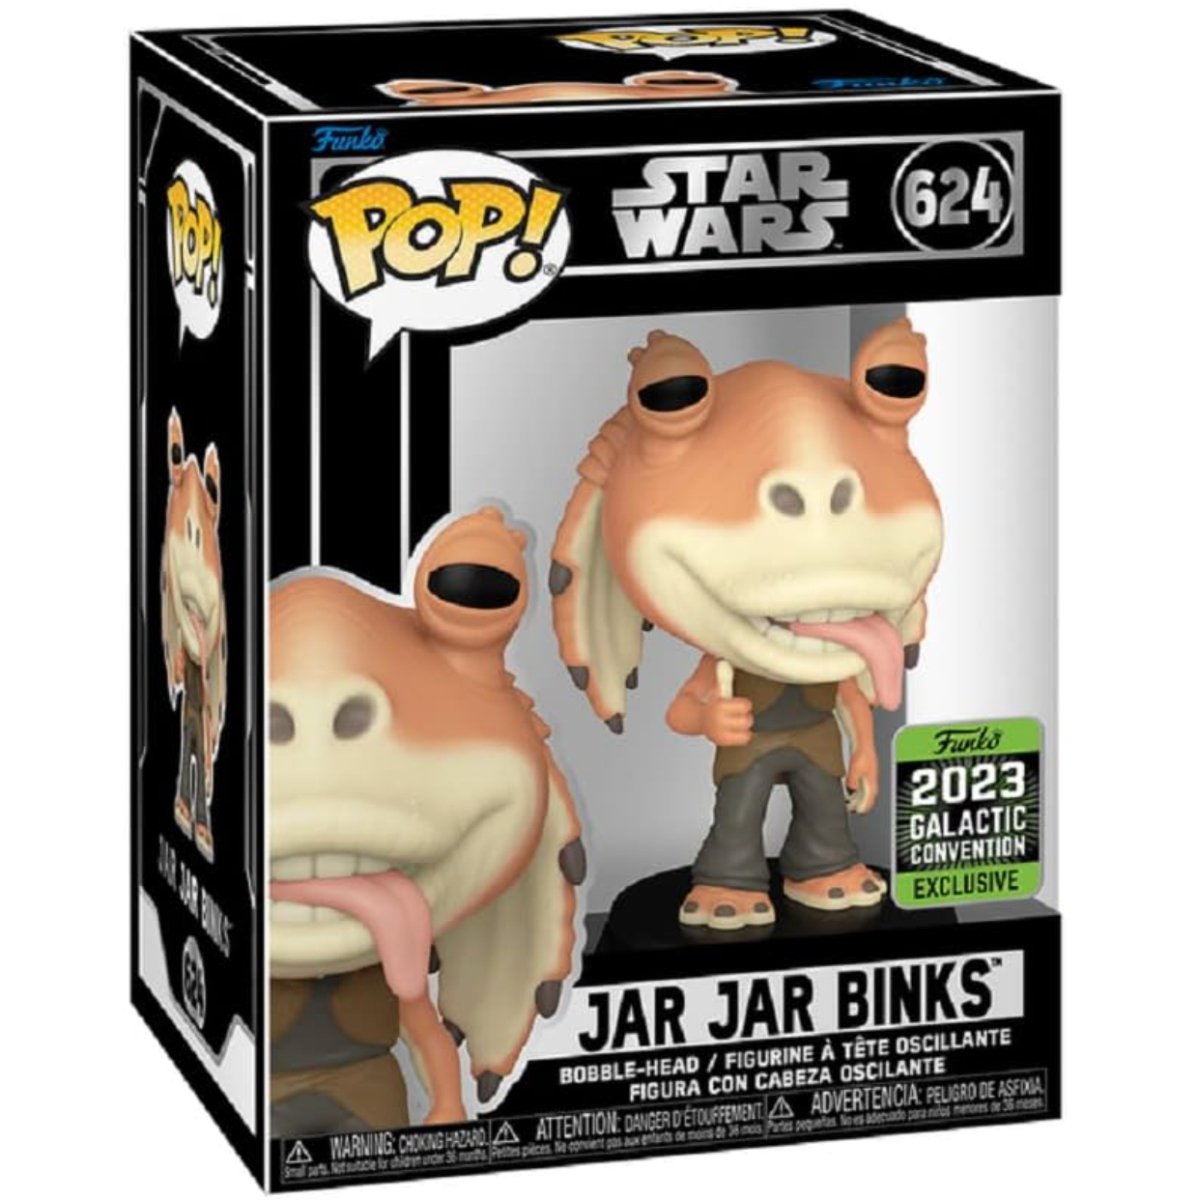 Star Wars - Jar Jar Binks (2023 Galactic Convention Exclusive) #624 - Funko Pop! Vinyl Star Wars - Persona Toys